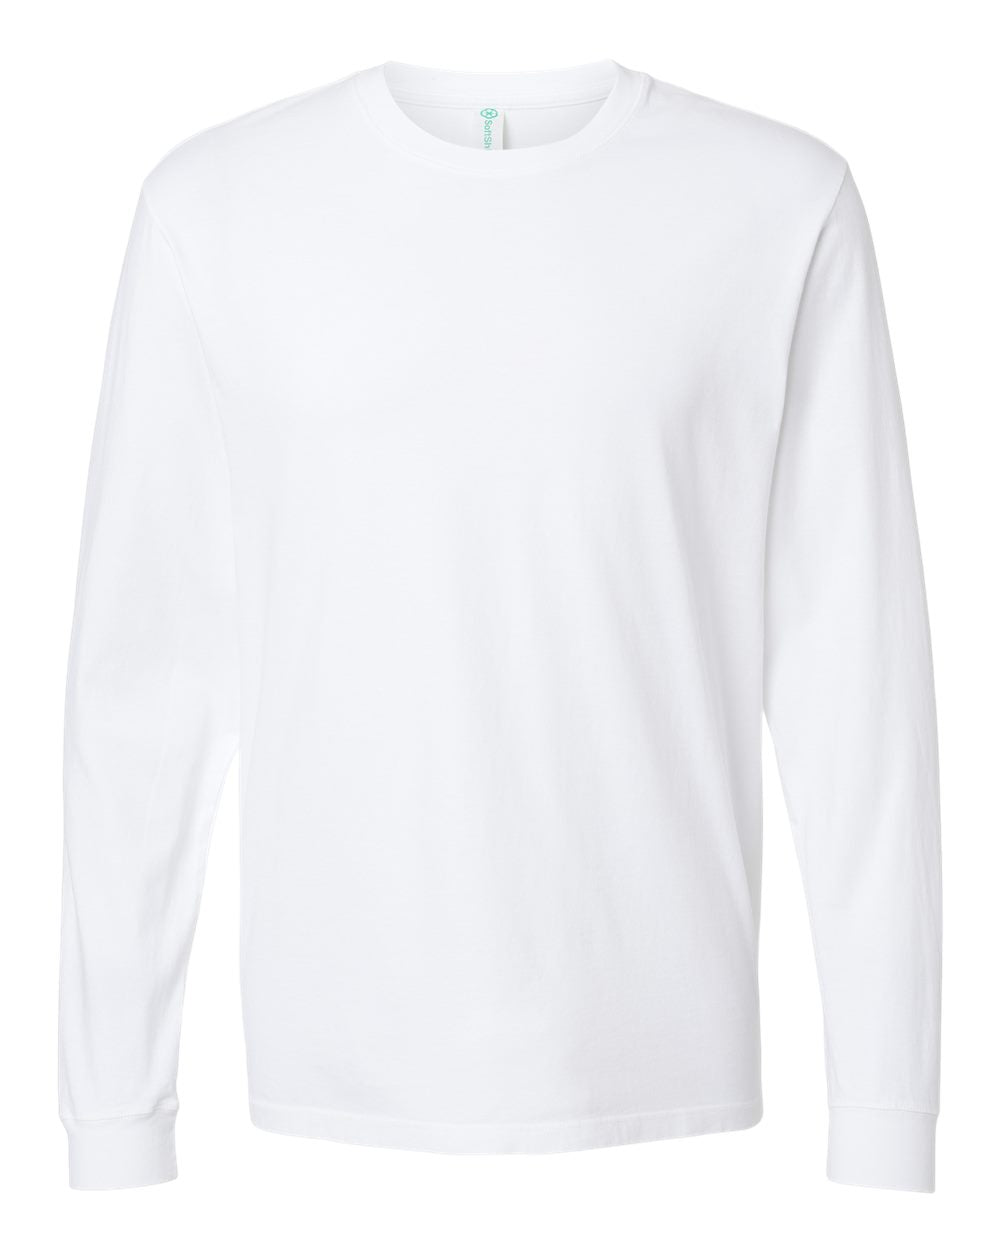 Softshirts® Unisex Organic Cotton Long-Sleeve Shirt in white